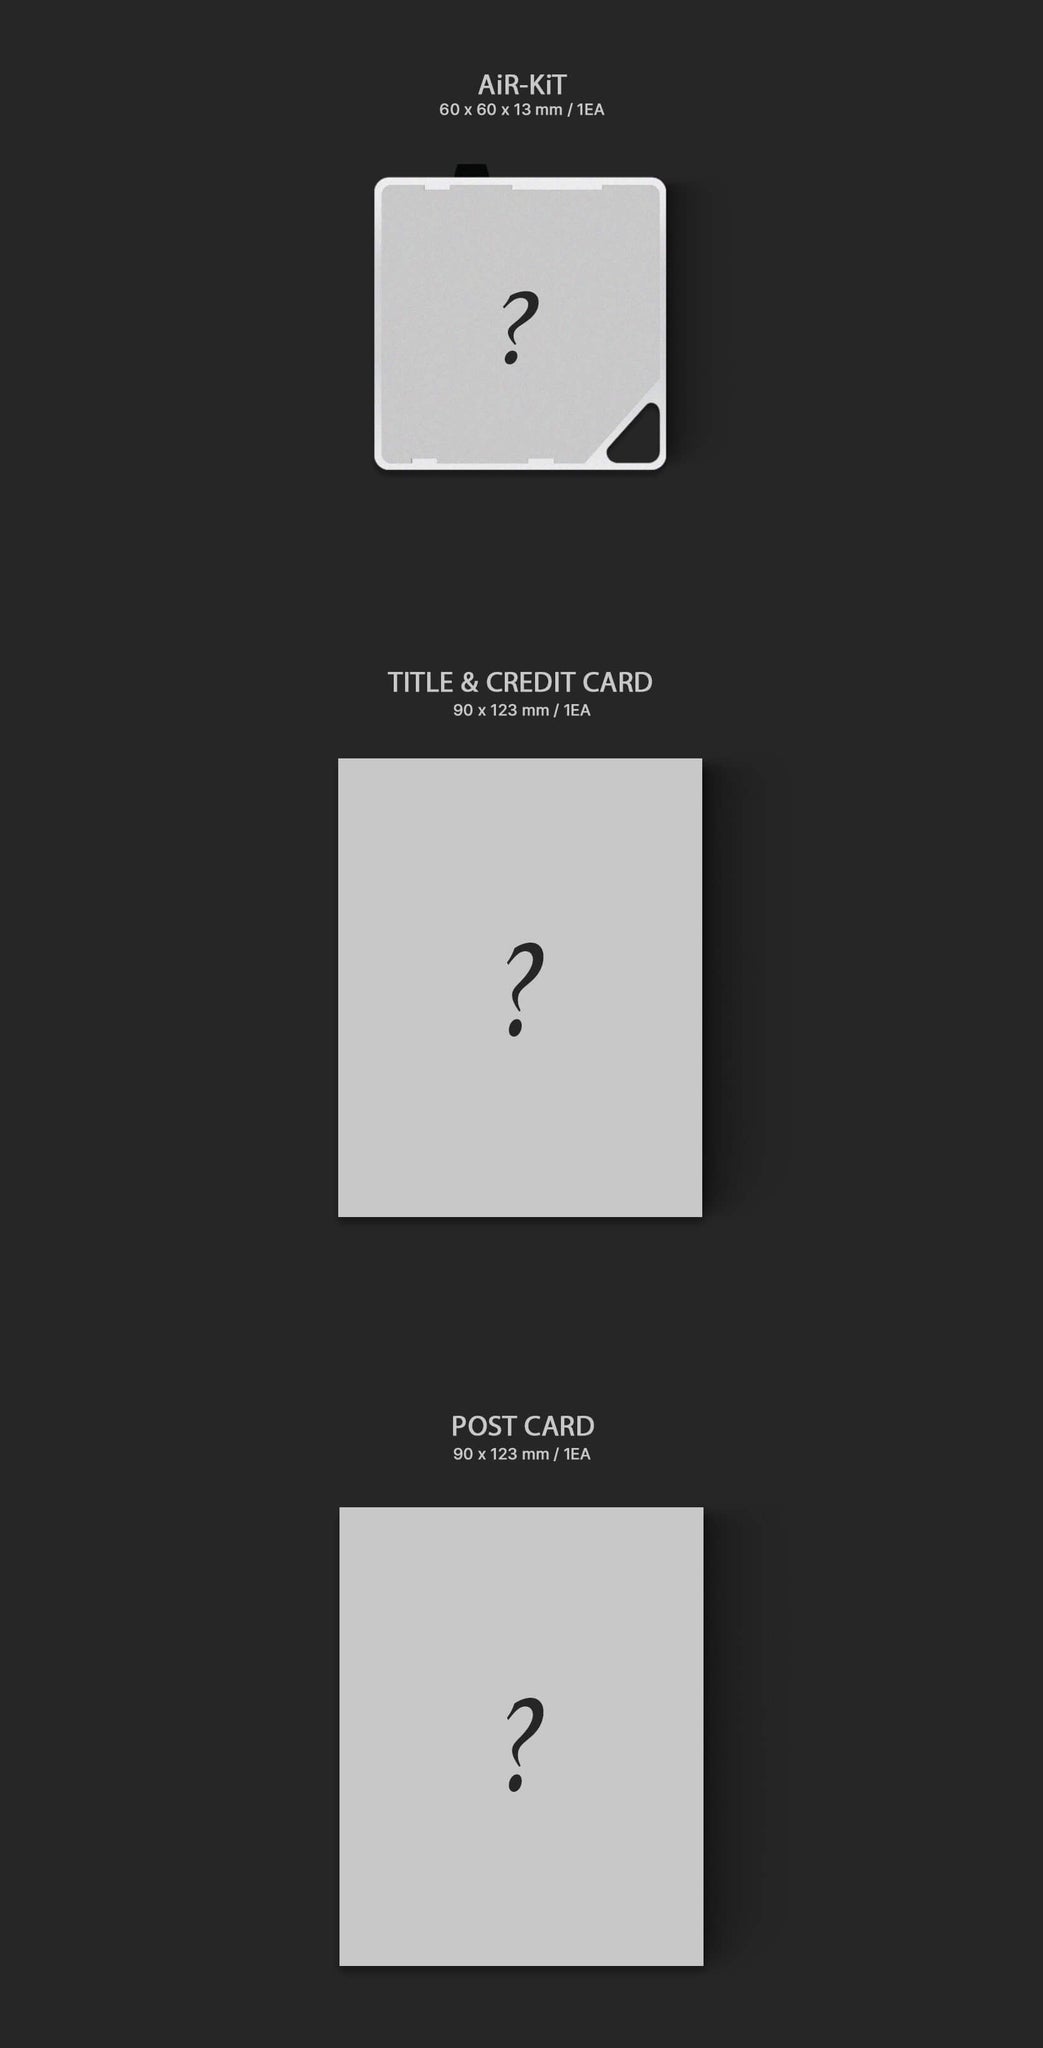 MONSTA X 12th Mini Album REASON - KiT Version AiR KiT Title & Credit Card Postcard